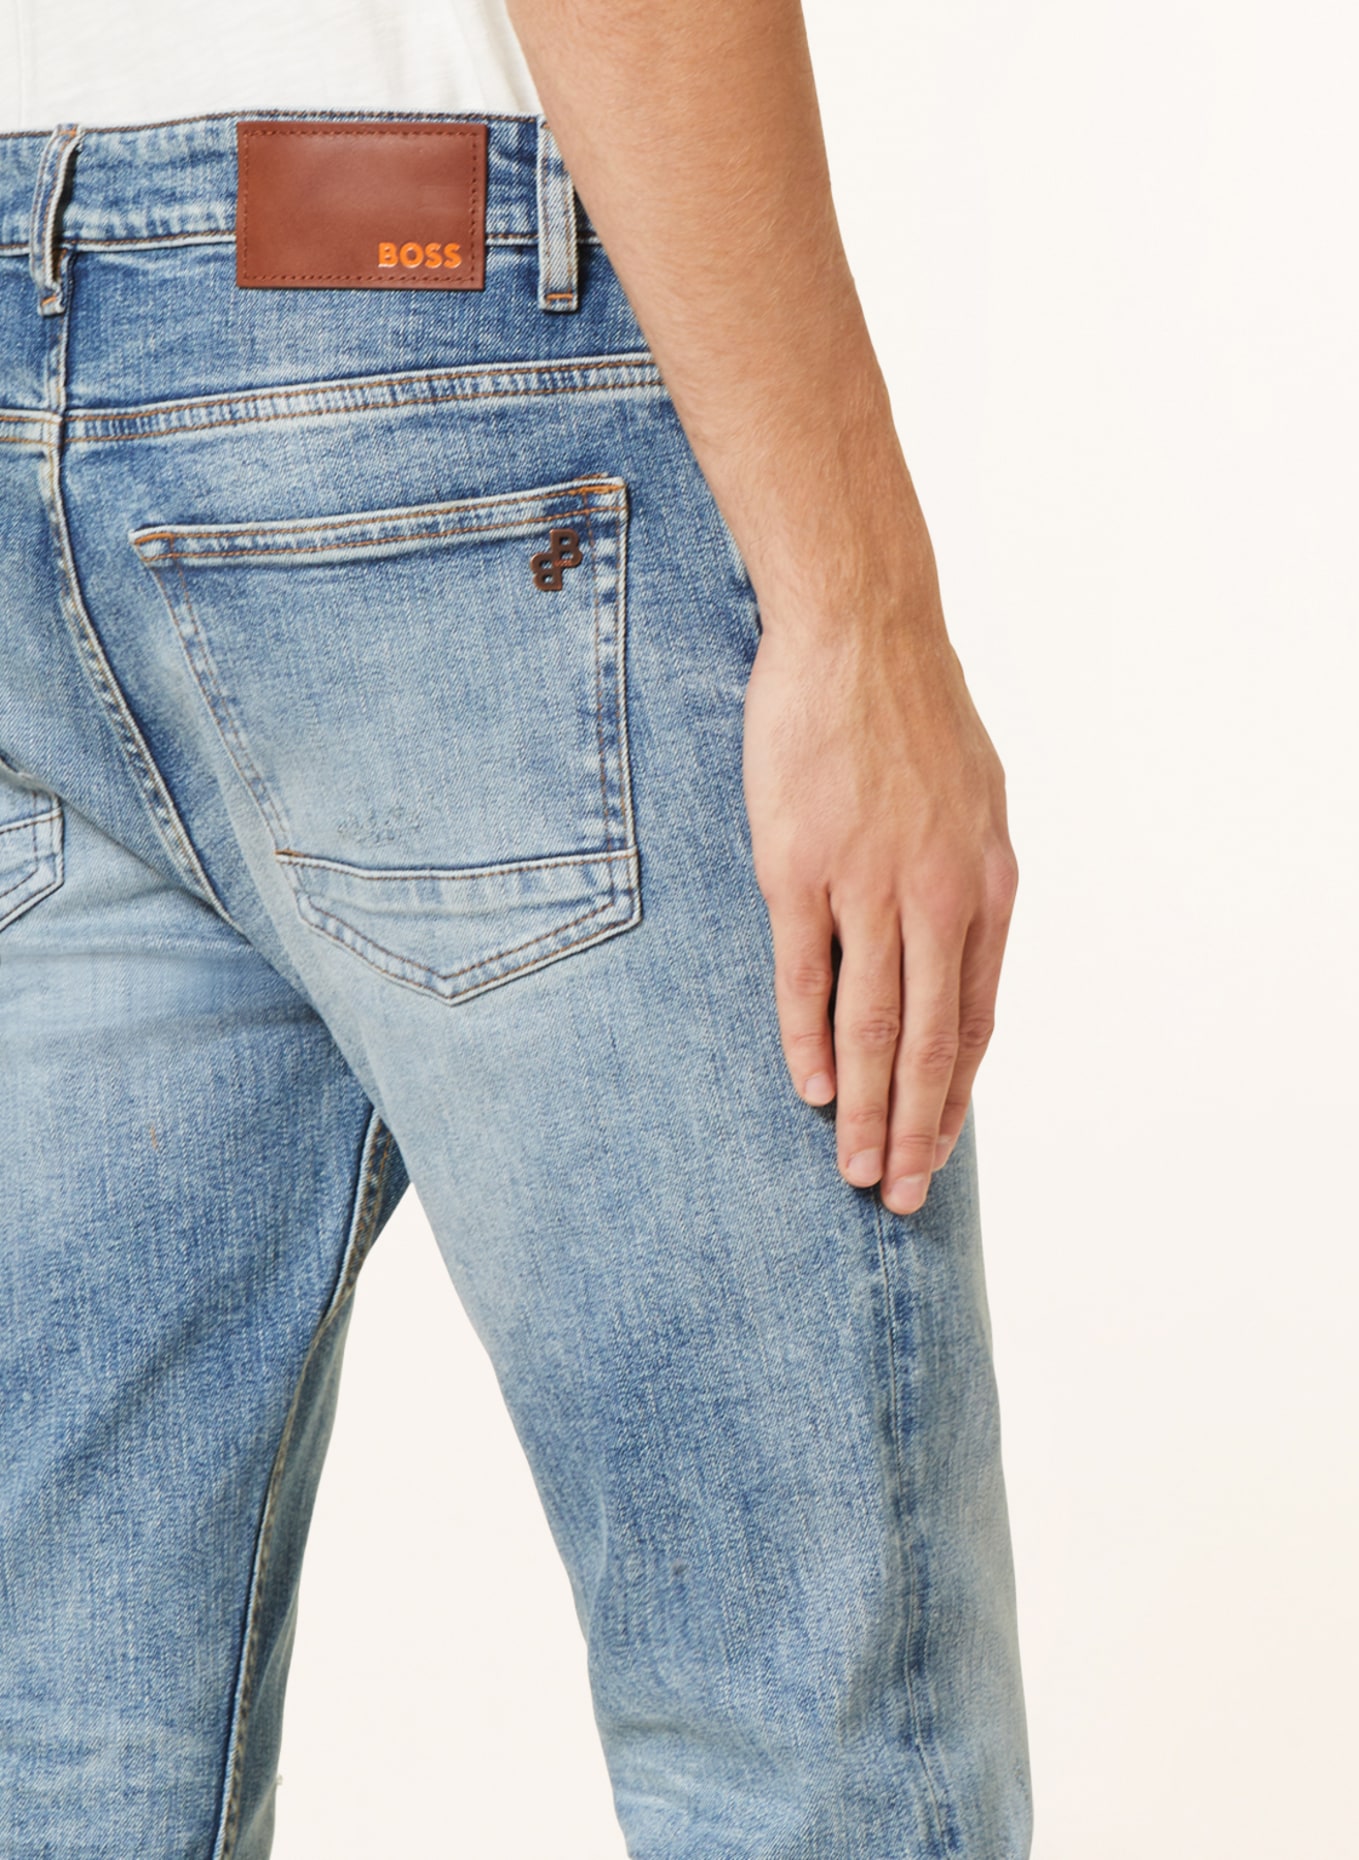 BOSS Jeans DELAWARE Slim Fit, Farbe: 442 TURQUOISE/AQUA (Bild 6)